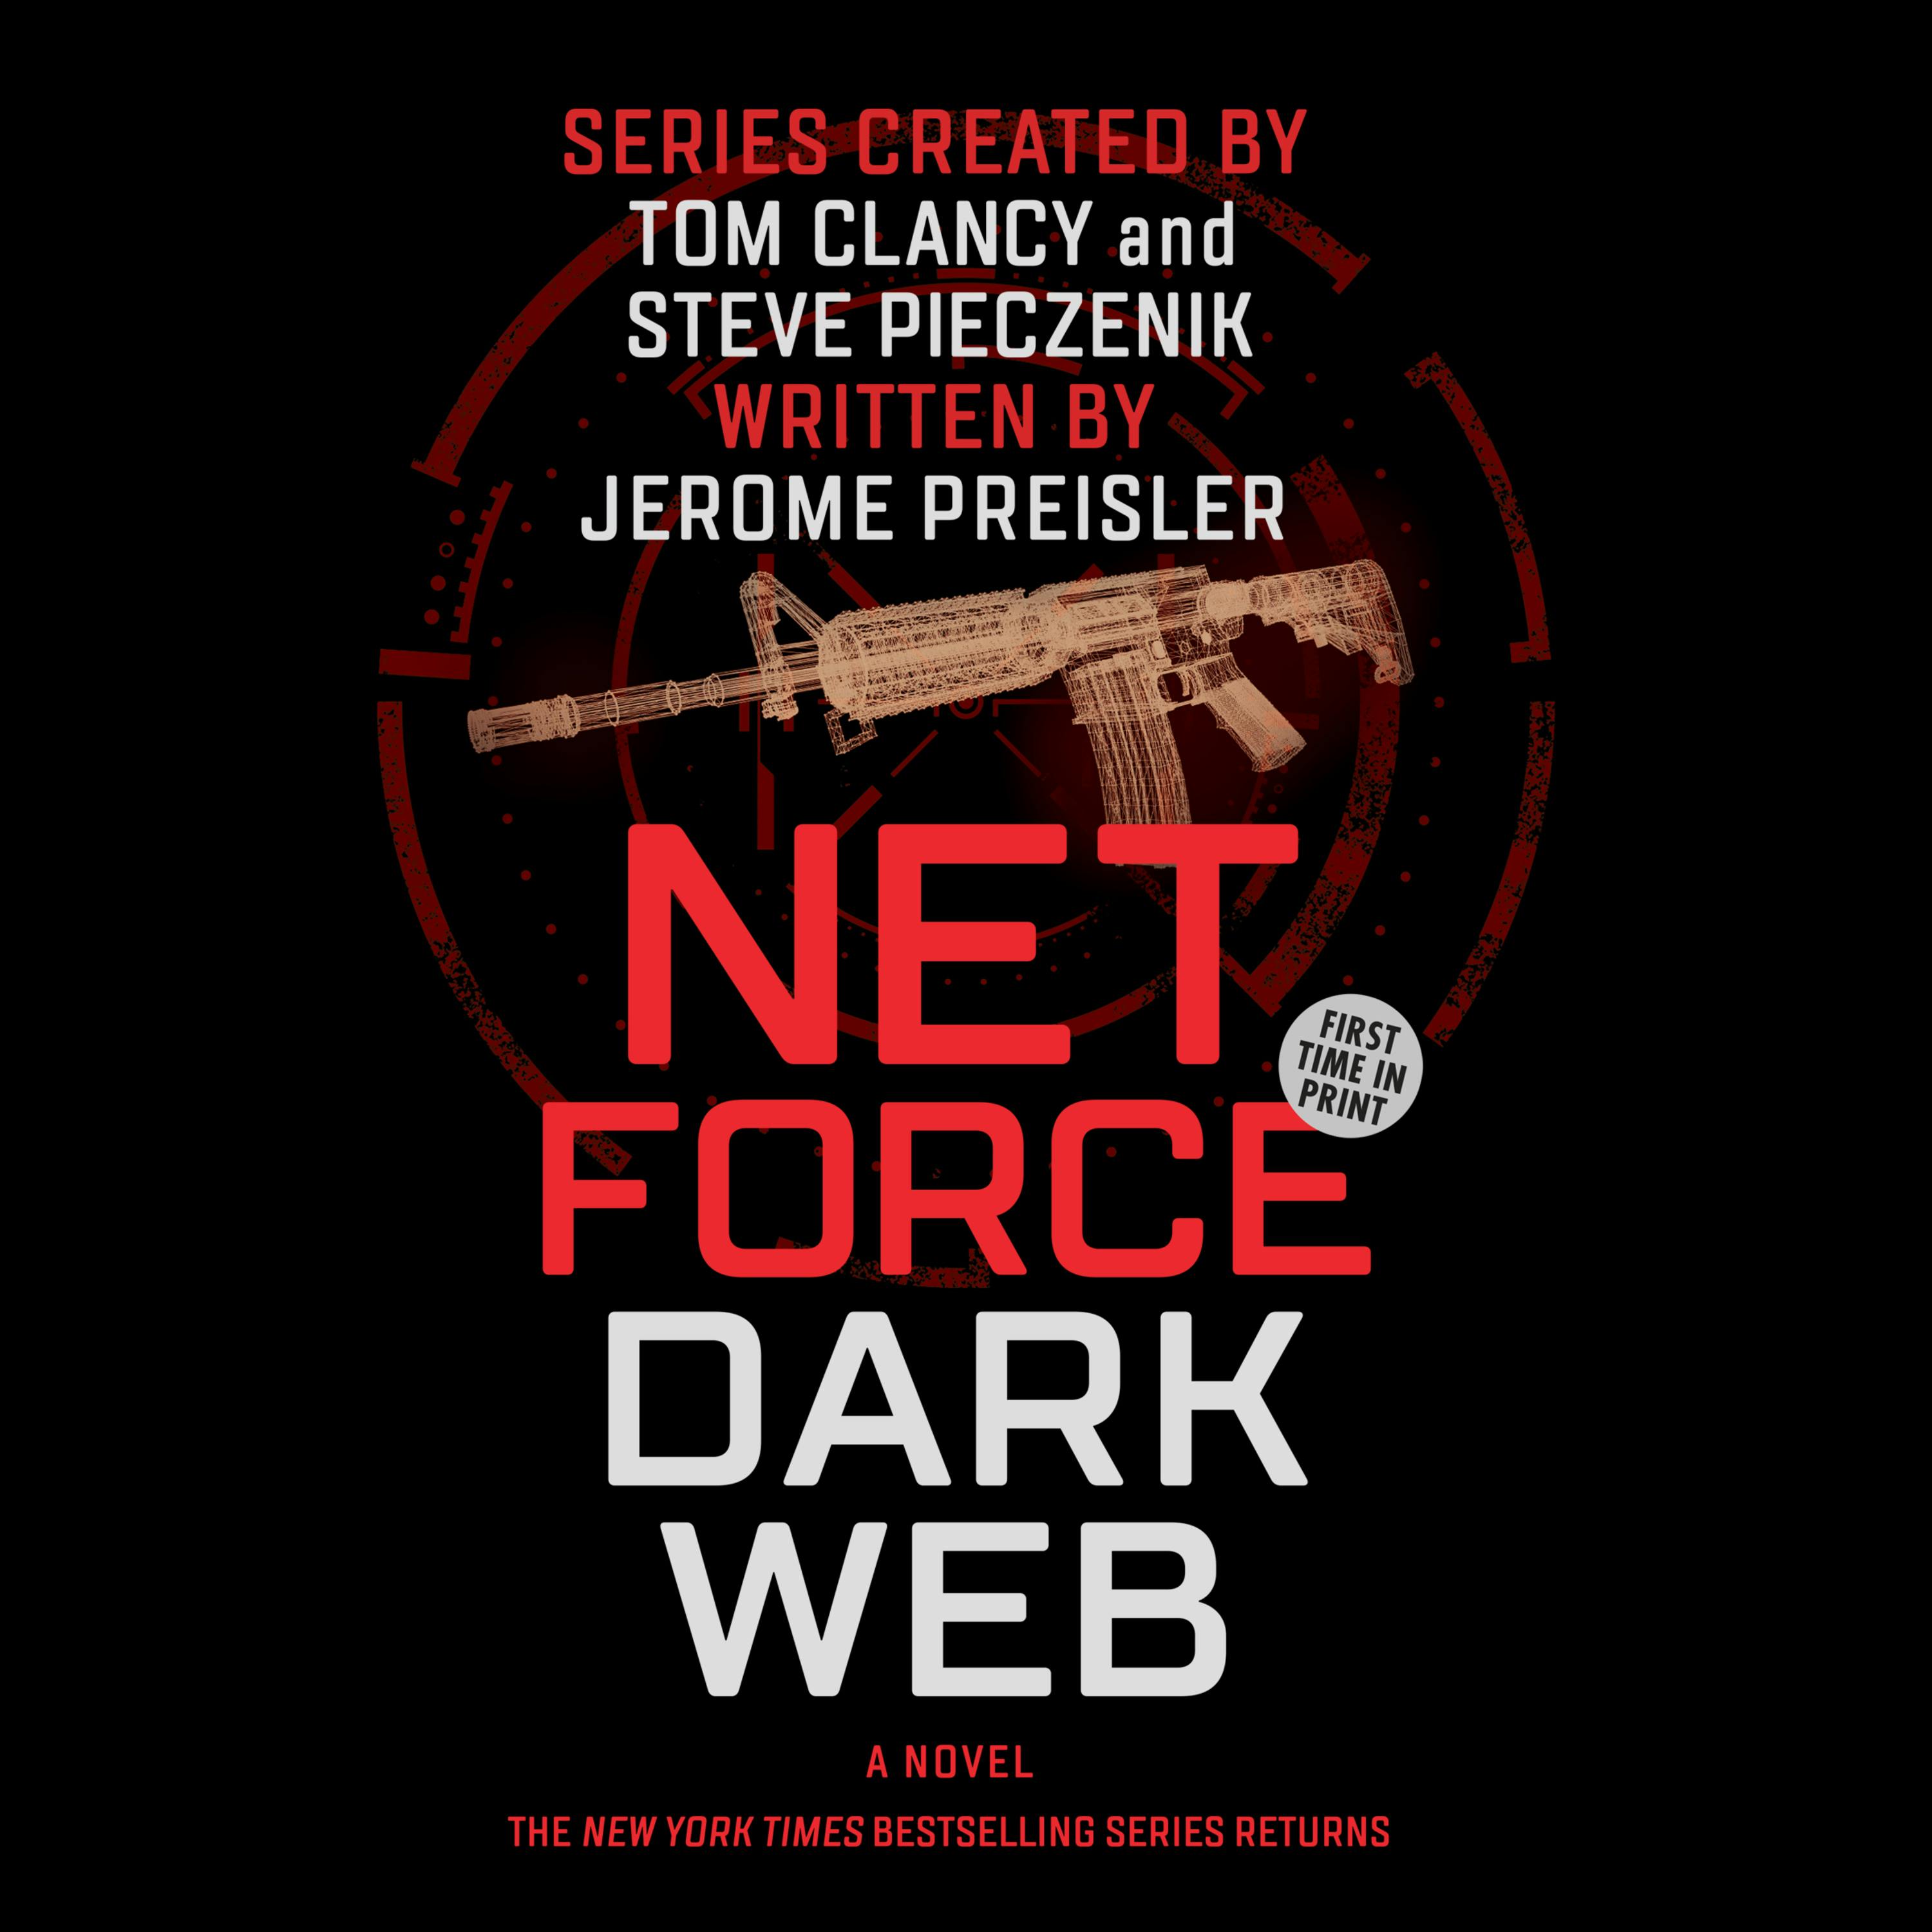 Net Force: Dark Web - Jerome Preisler